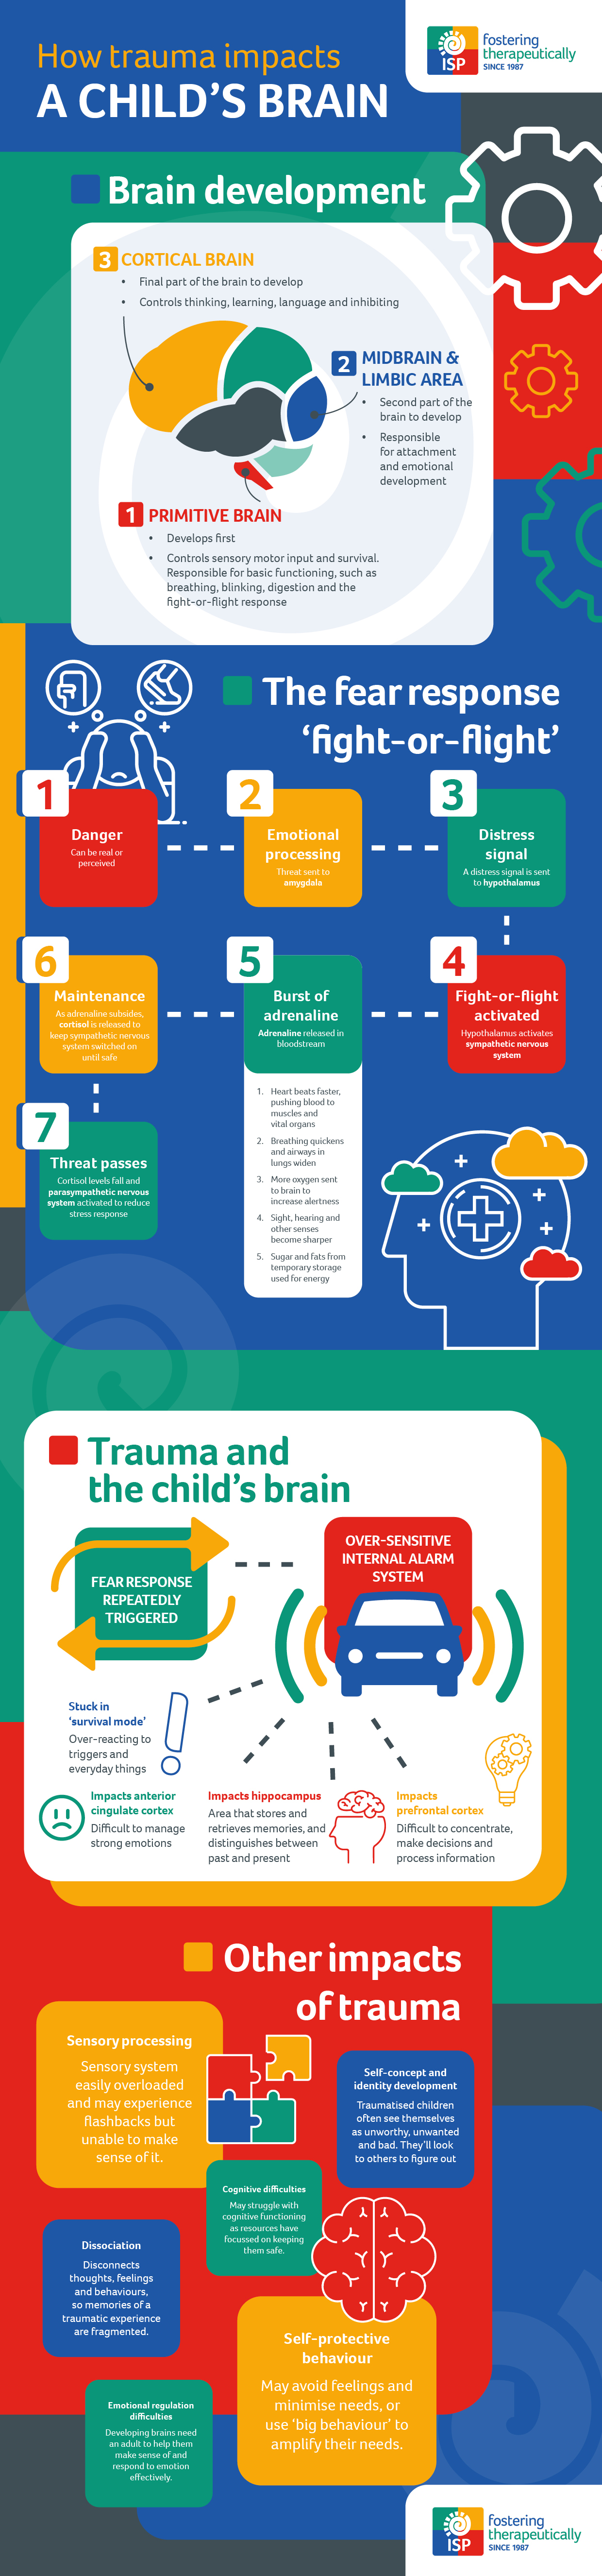 How trauma impacts a child’s brain